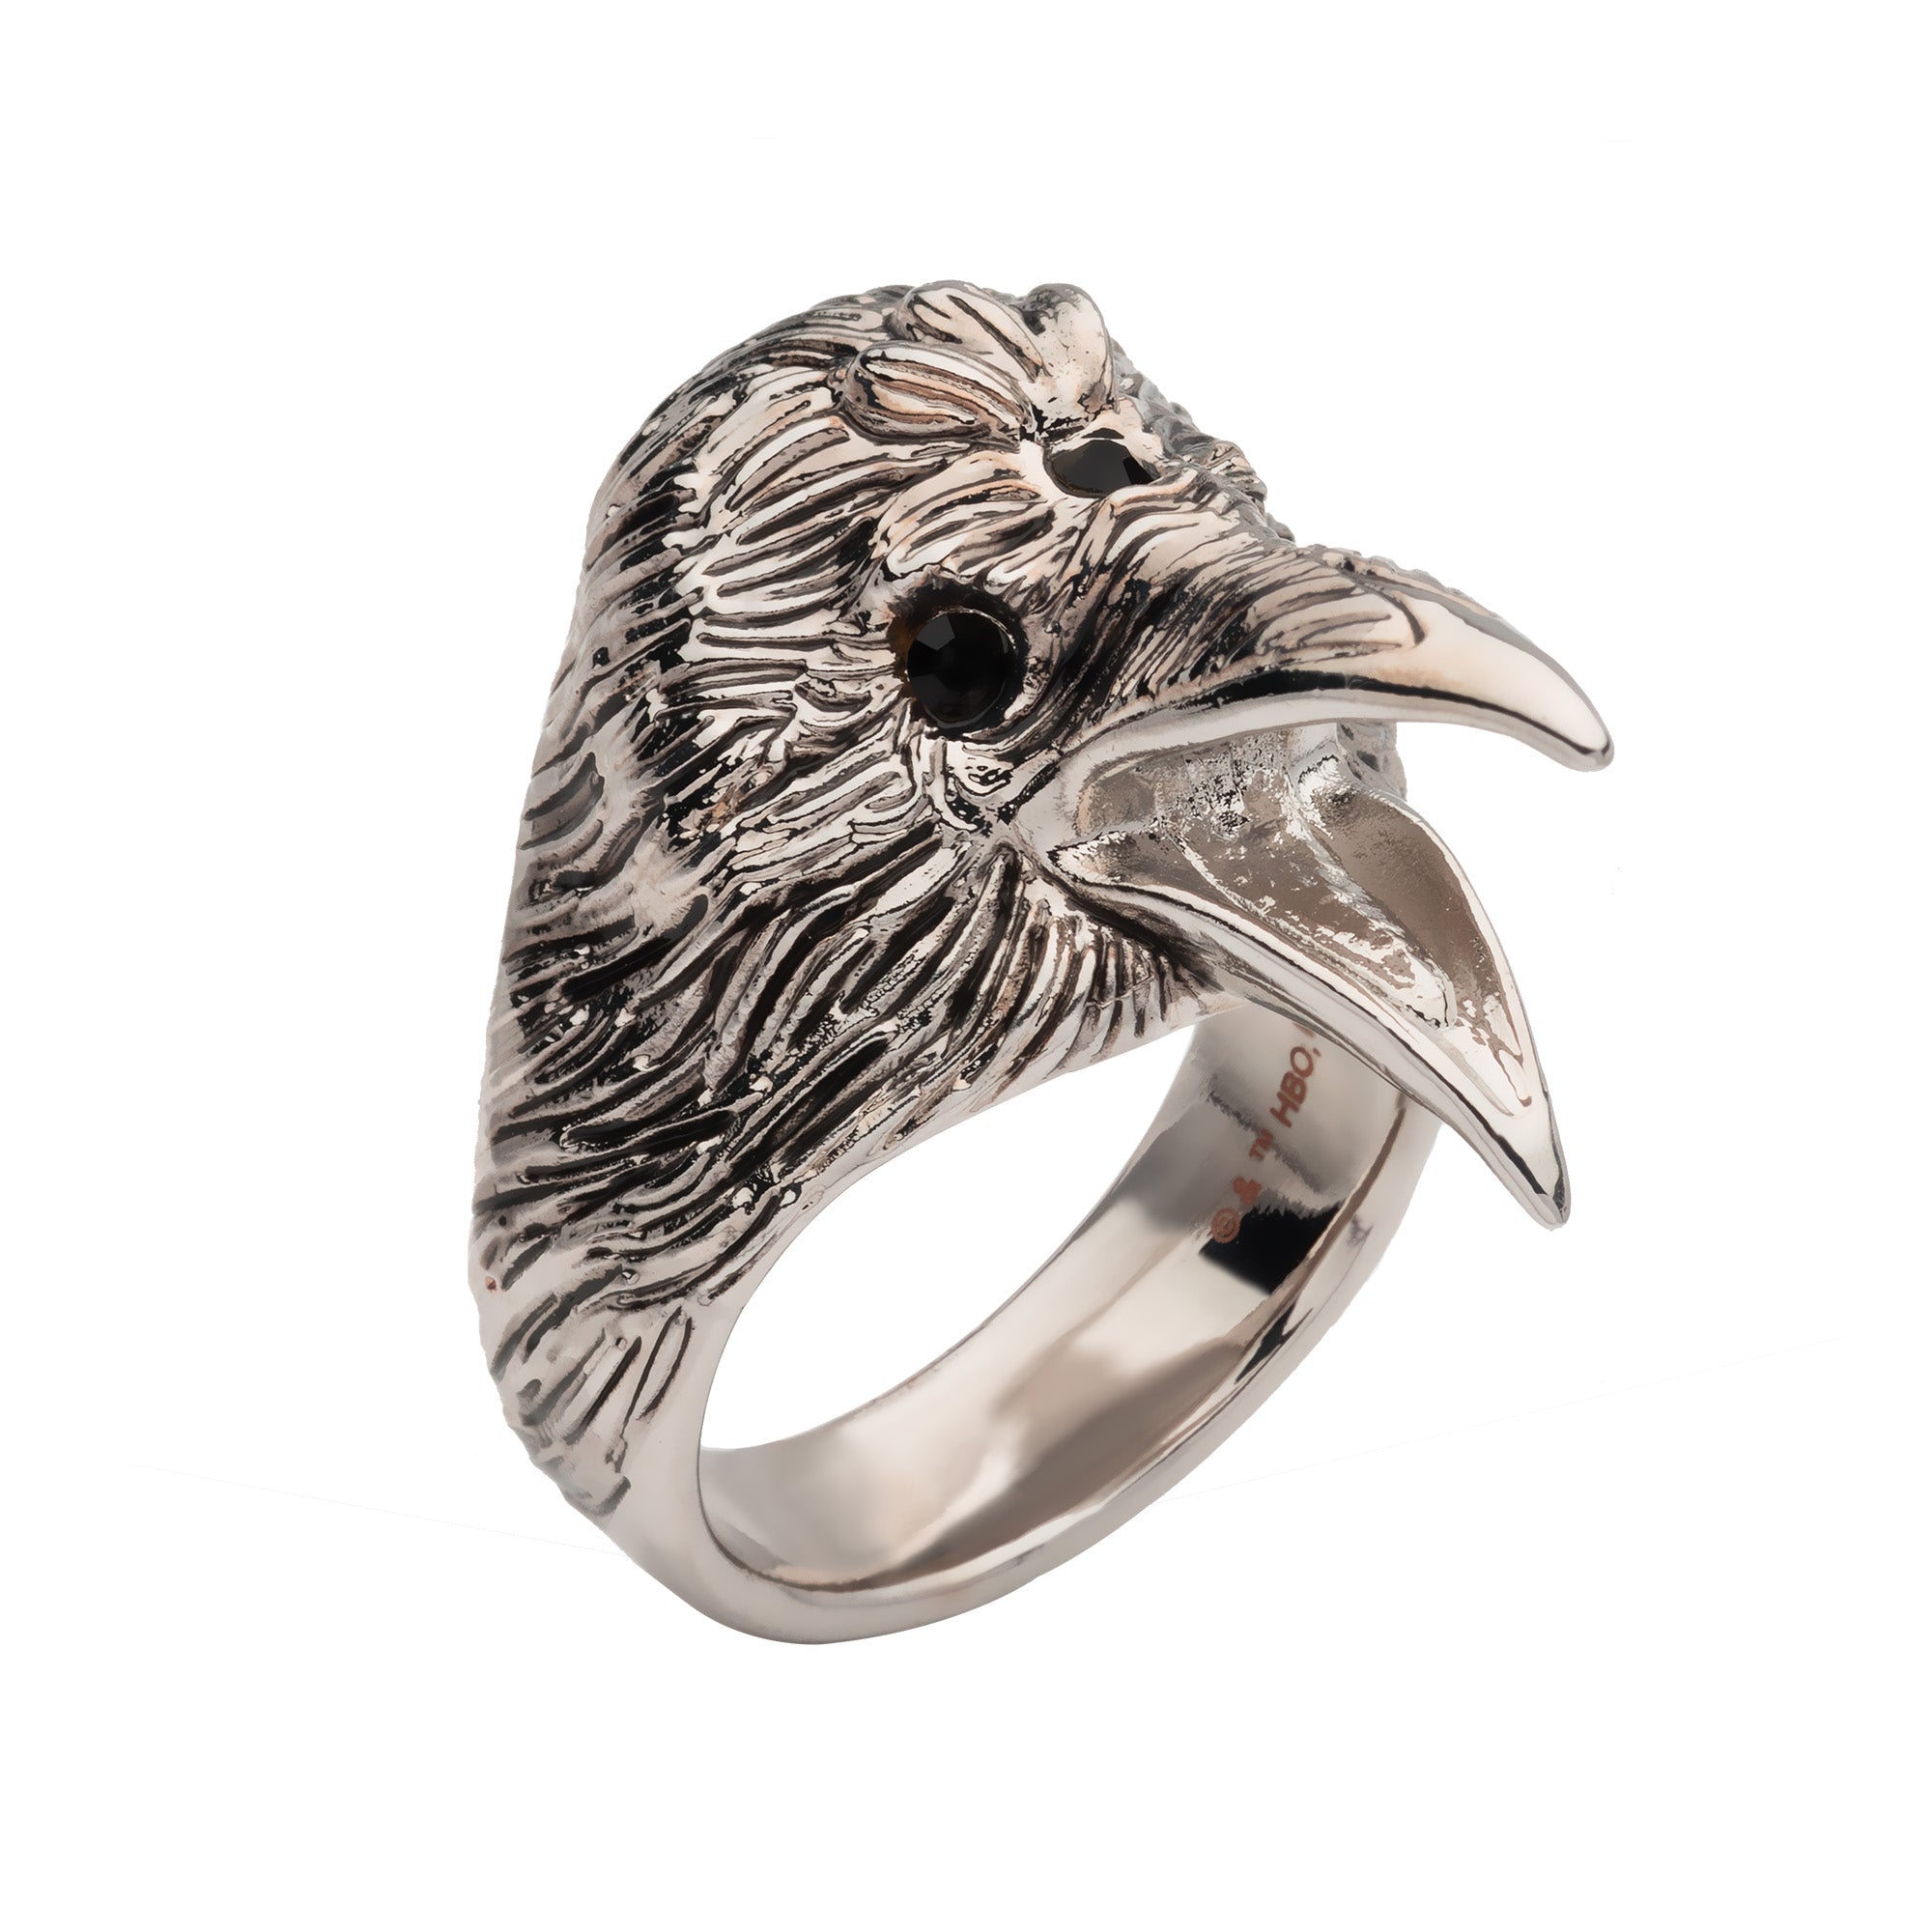 Game of Thrones Three-Eyed Raven Ring